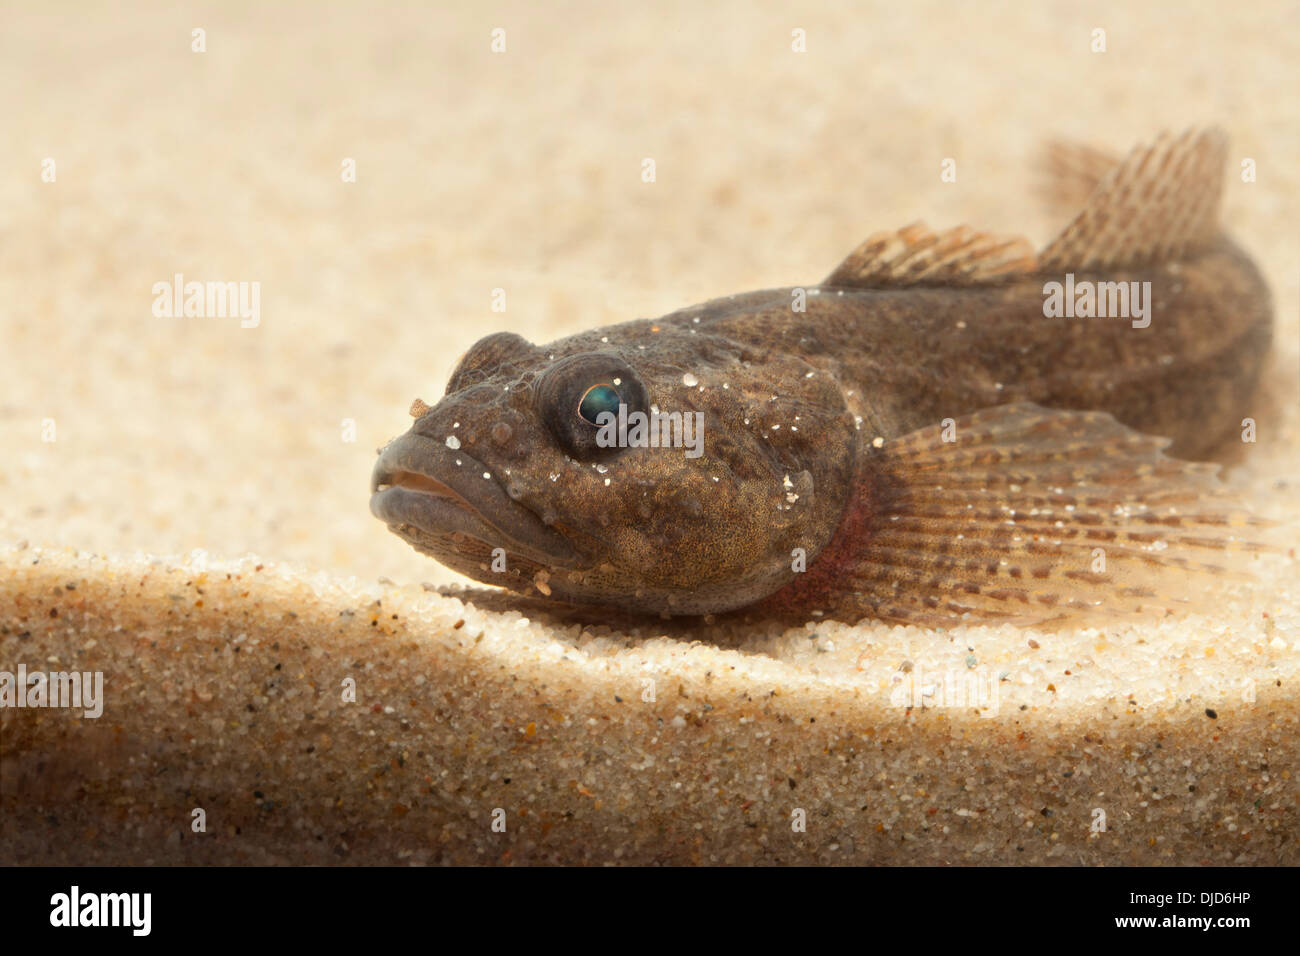 Cottus perifretum fish on sand Stock Photo